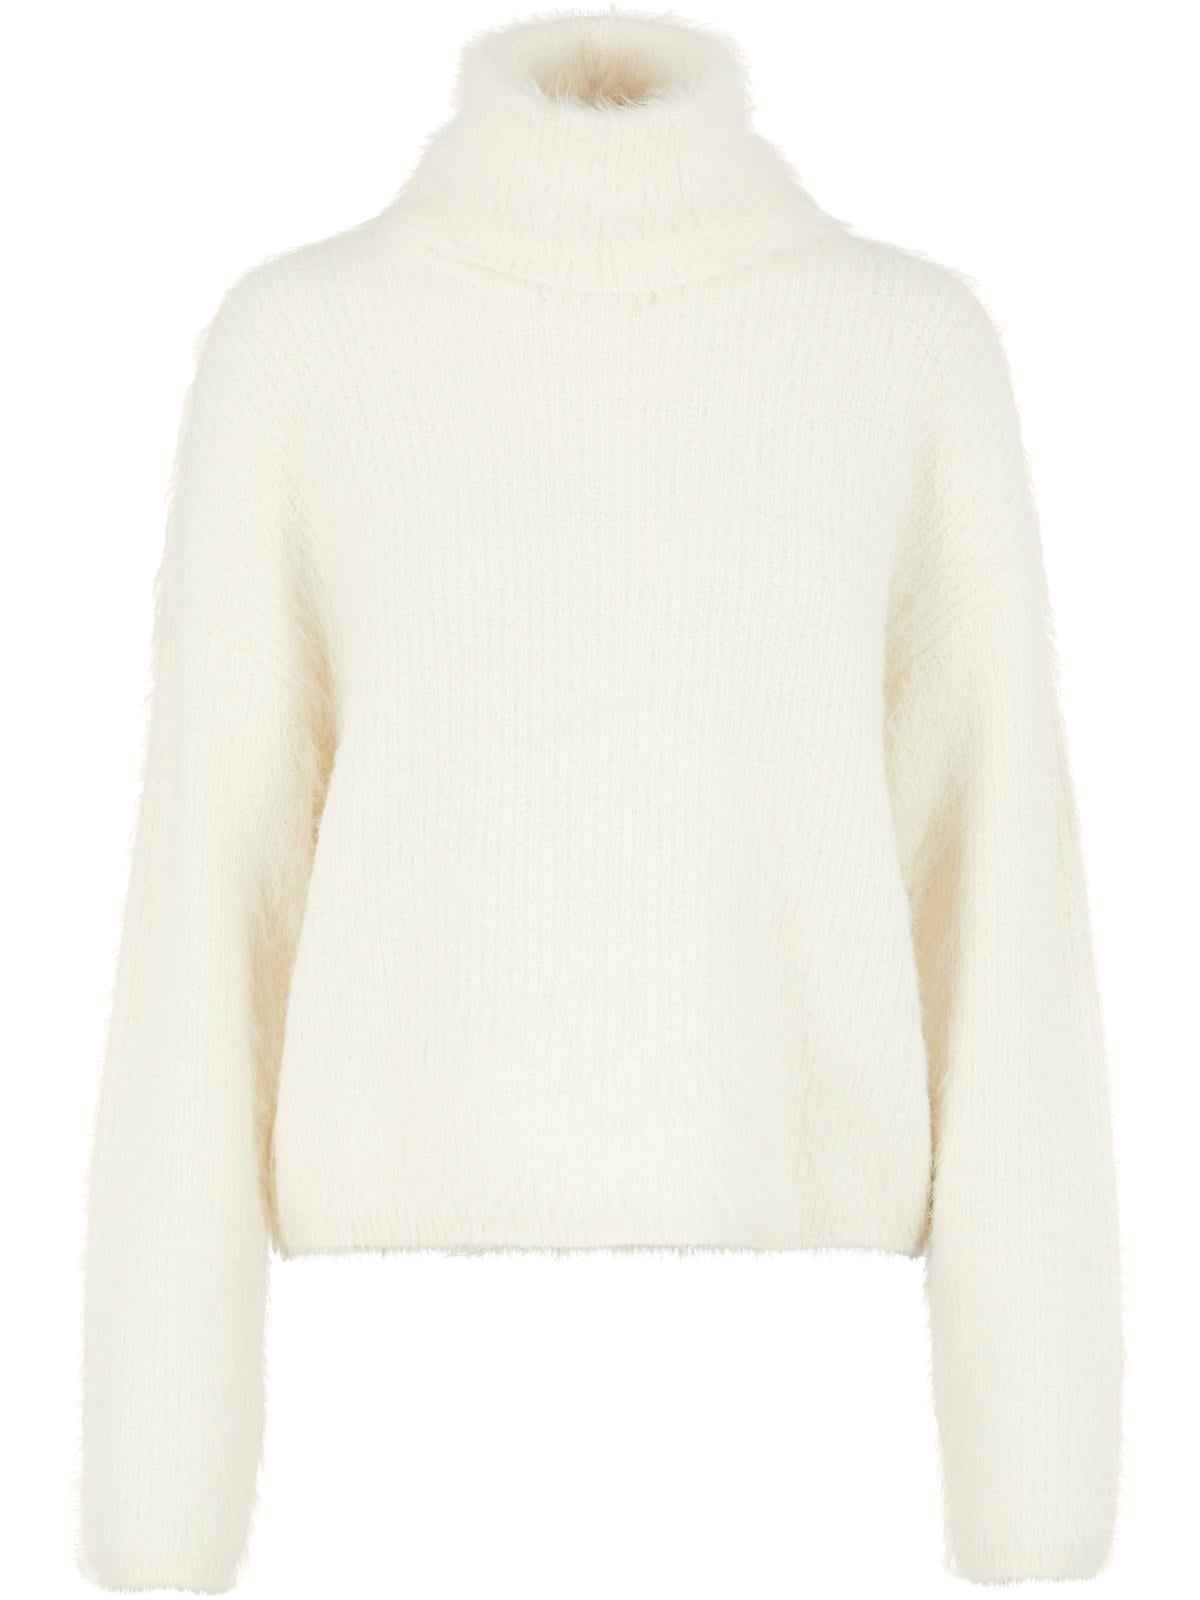 Vero Moda Womens Turtleneck Sweater White M -